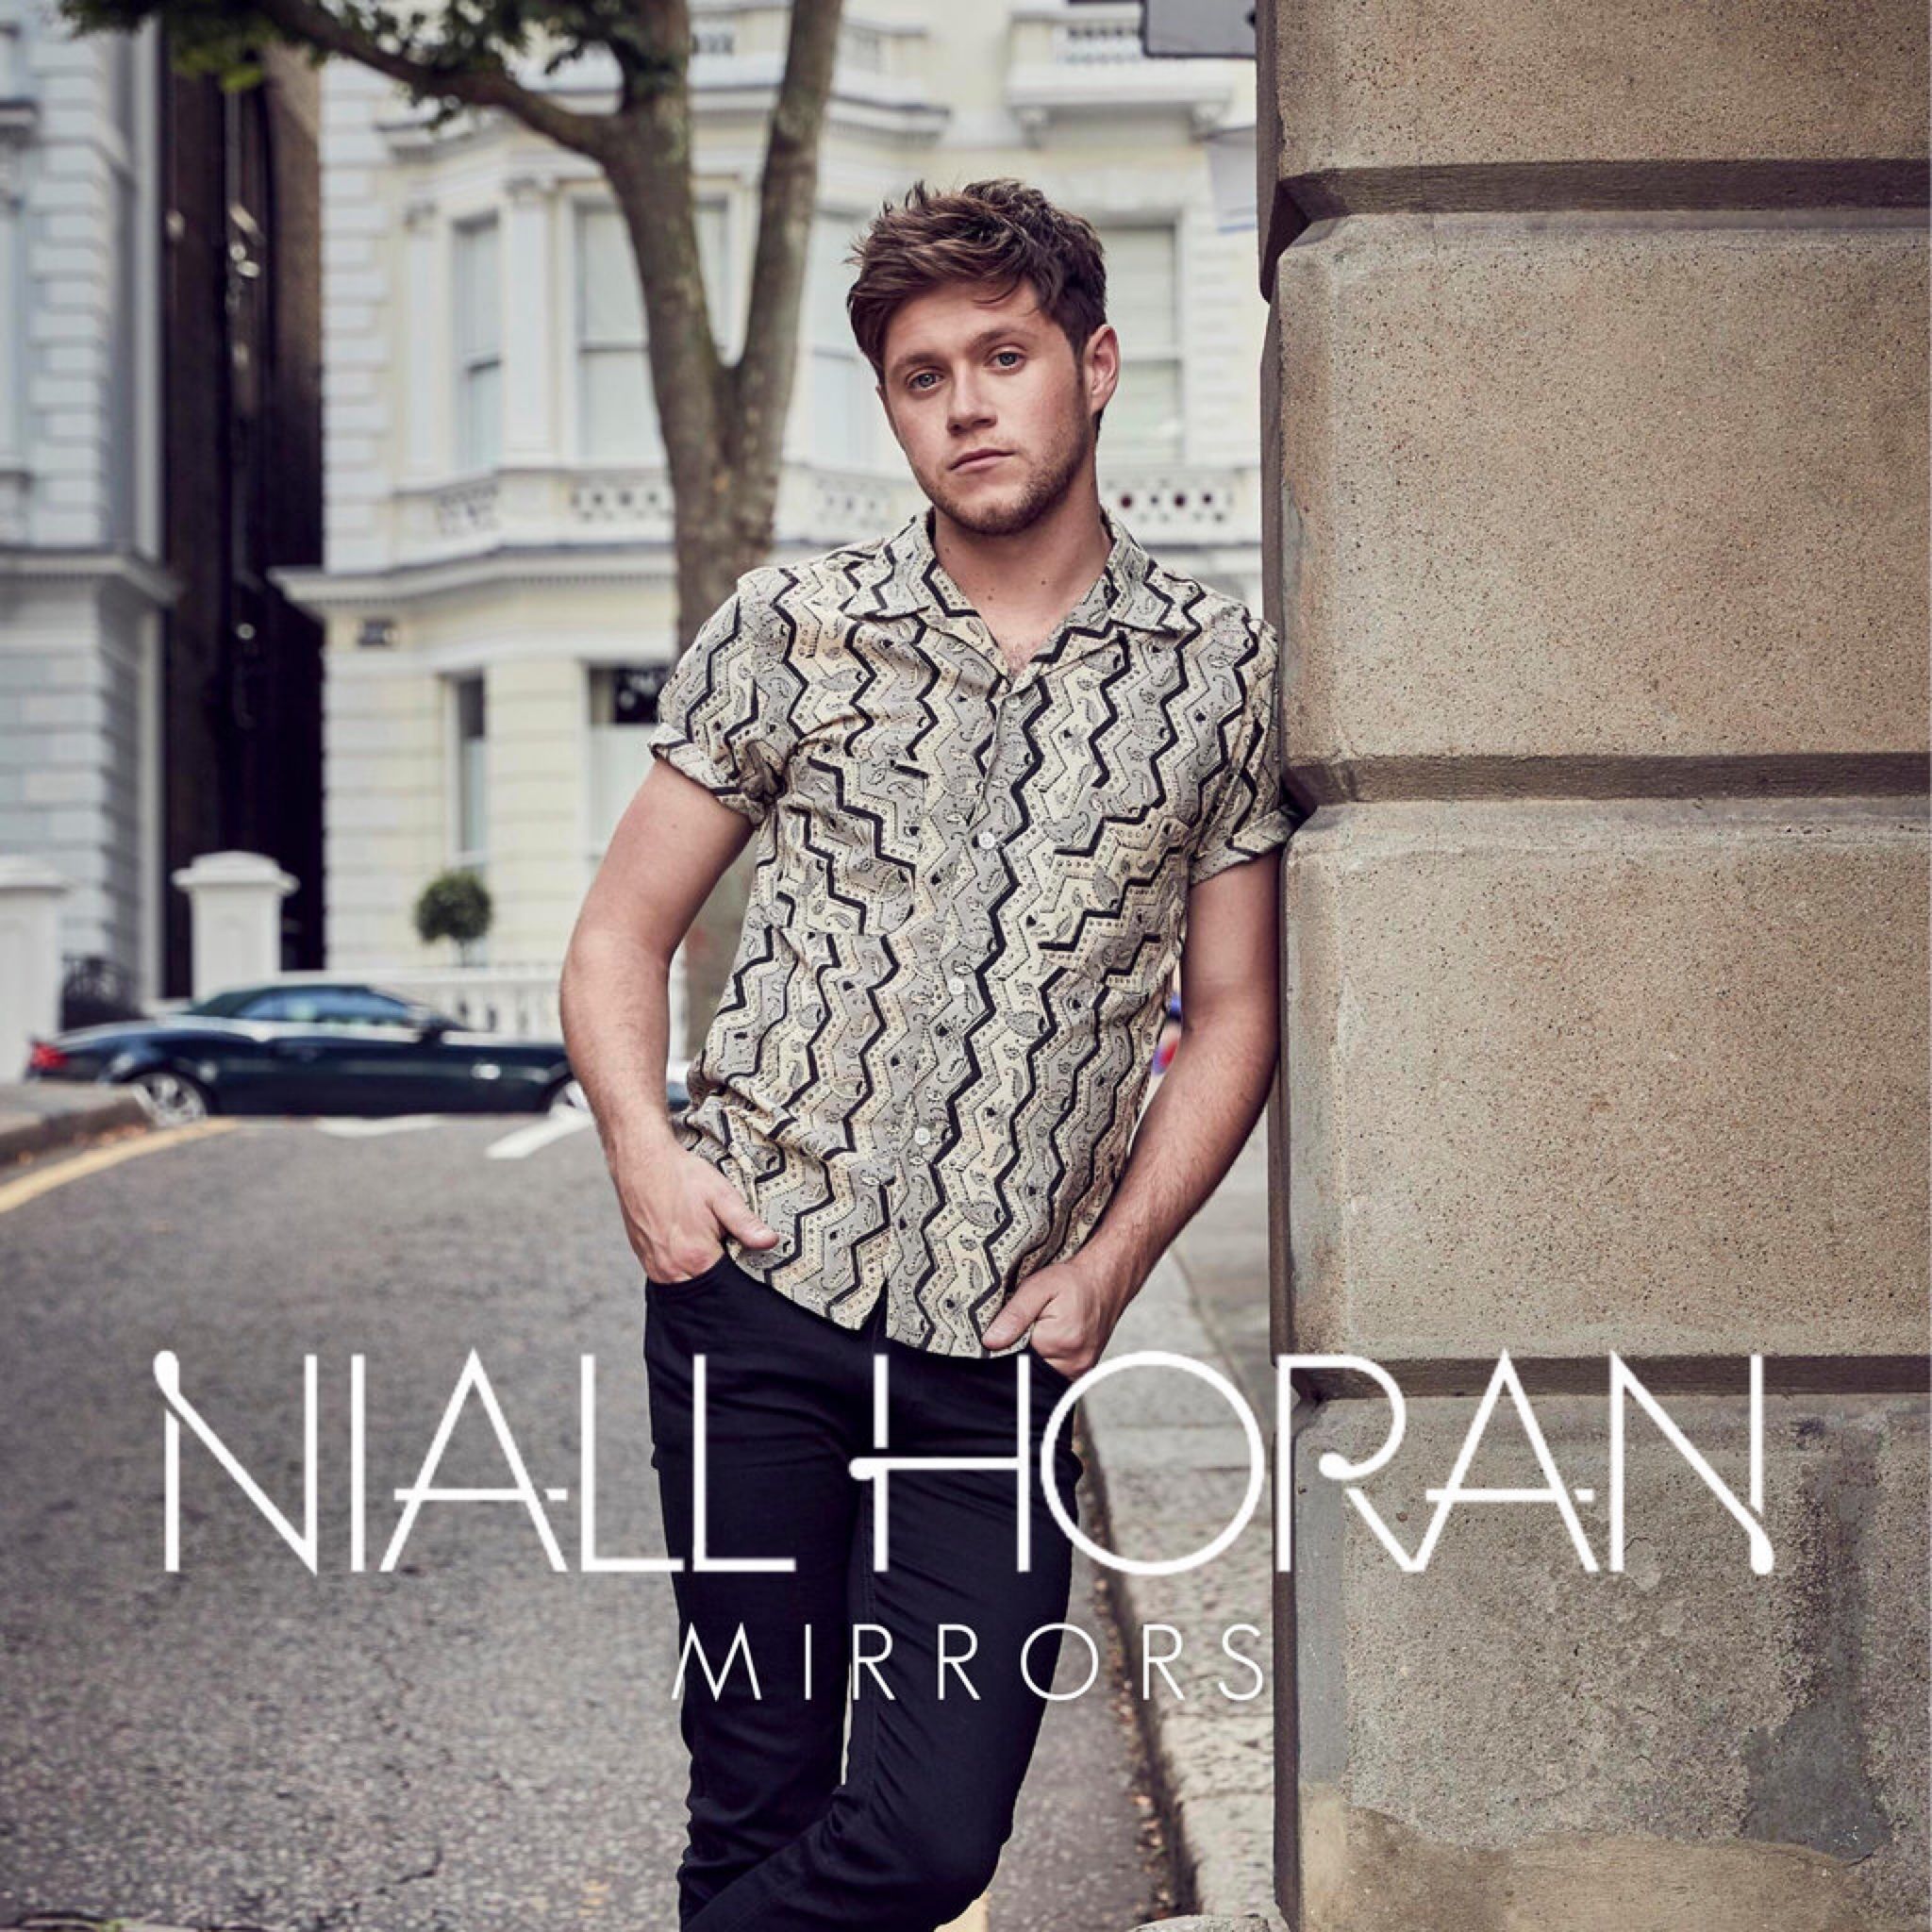 Niall Horan Mirrors cover artwork